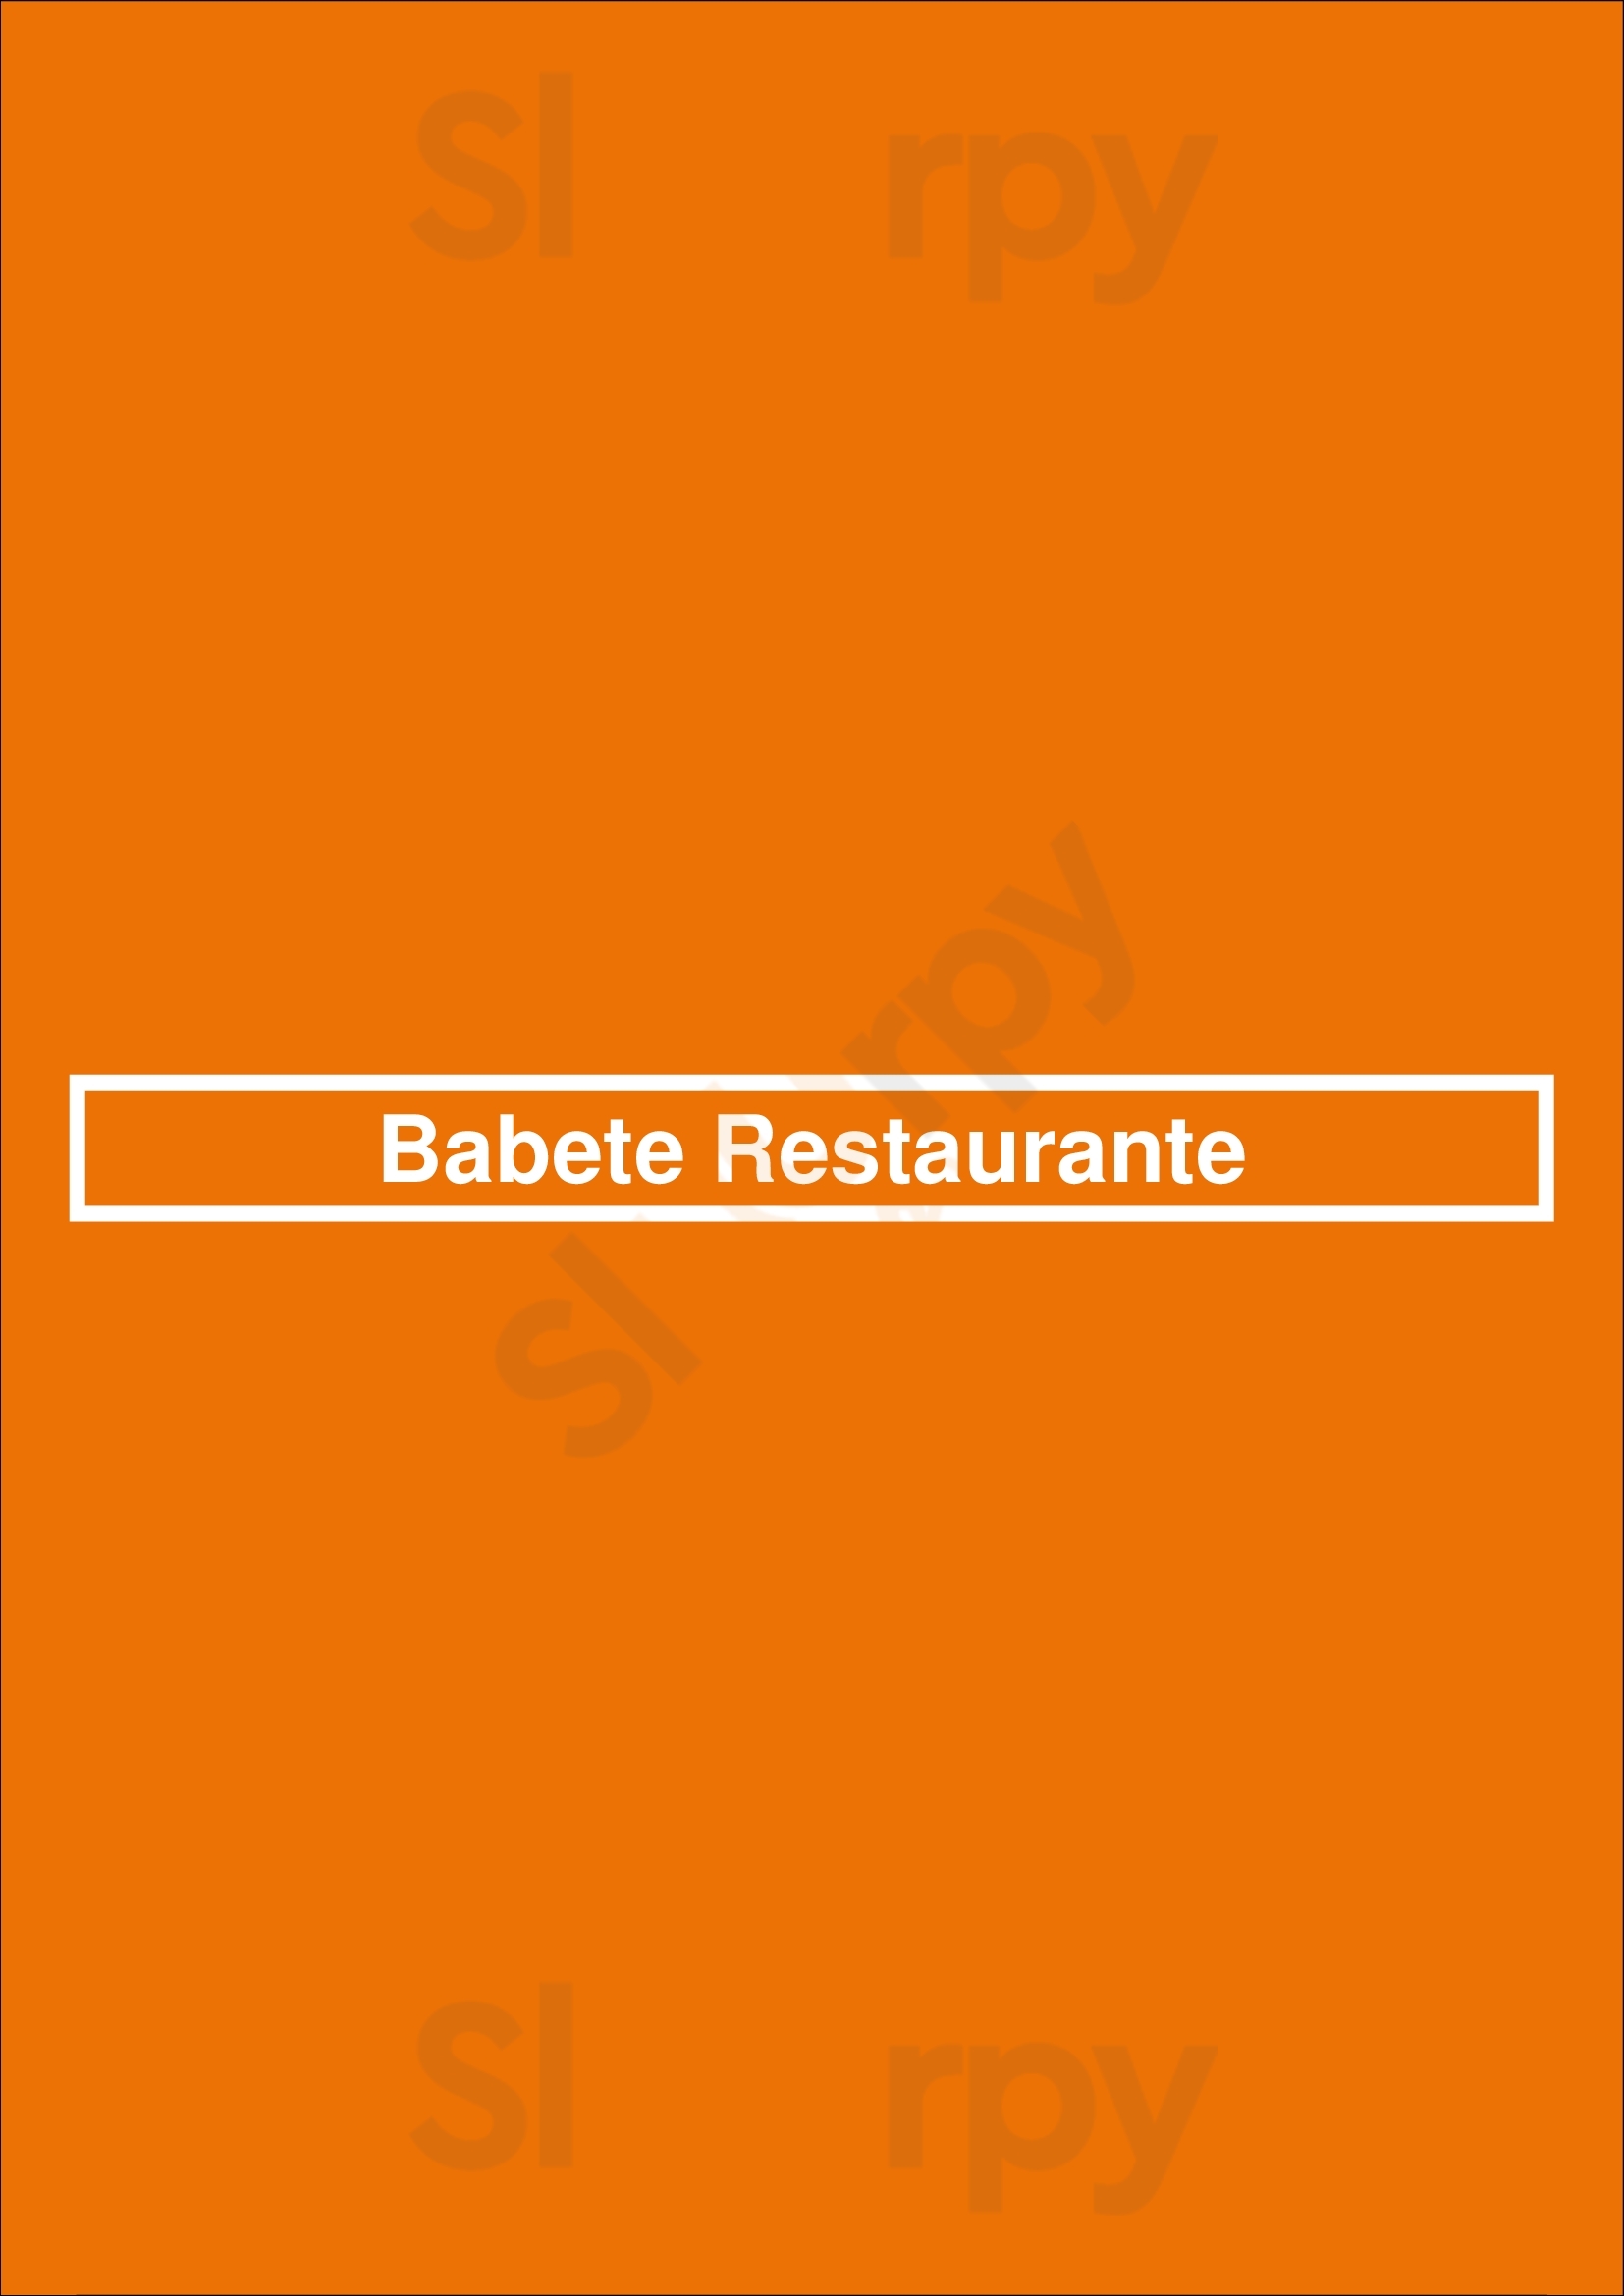 Babete Restaurante Lisboa Menu - 1